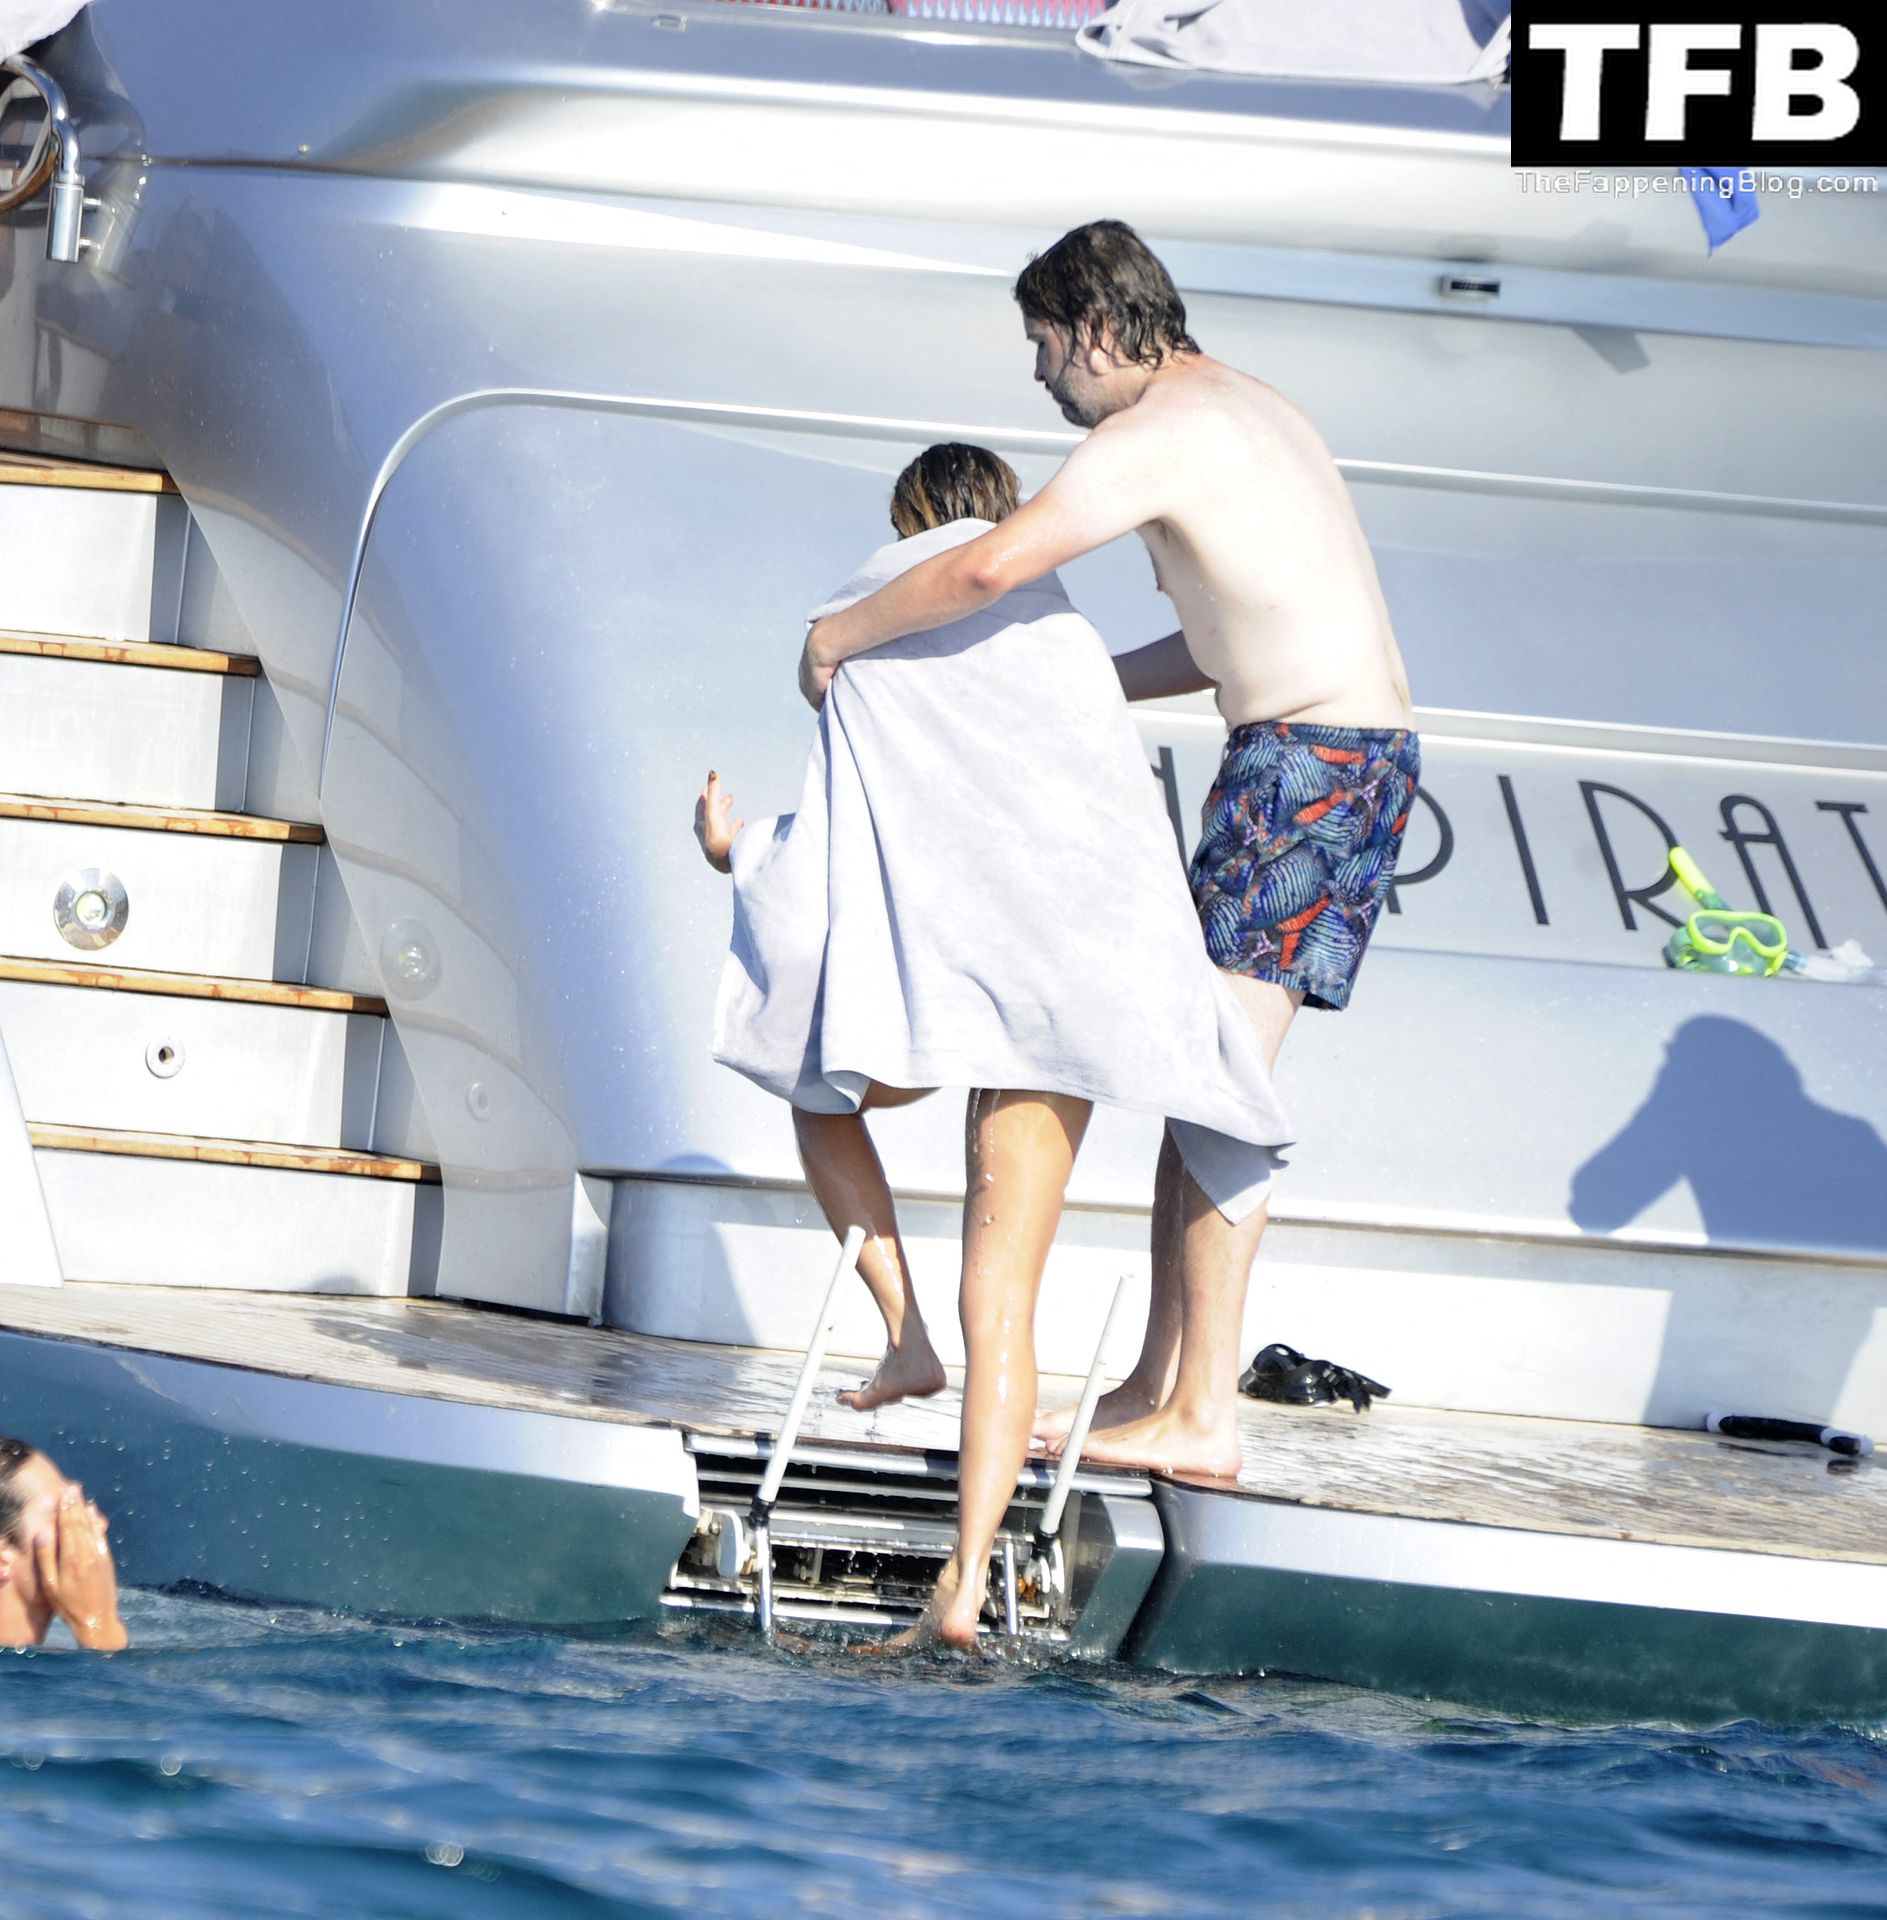 Margot Robbie Sexy The Fappening Blog 13 - Margot Robbie & Rami Malek Enjoy a Fun Boat Day in Formentera (43 Photos)